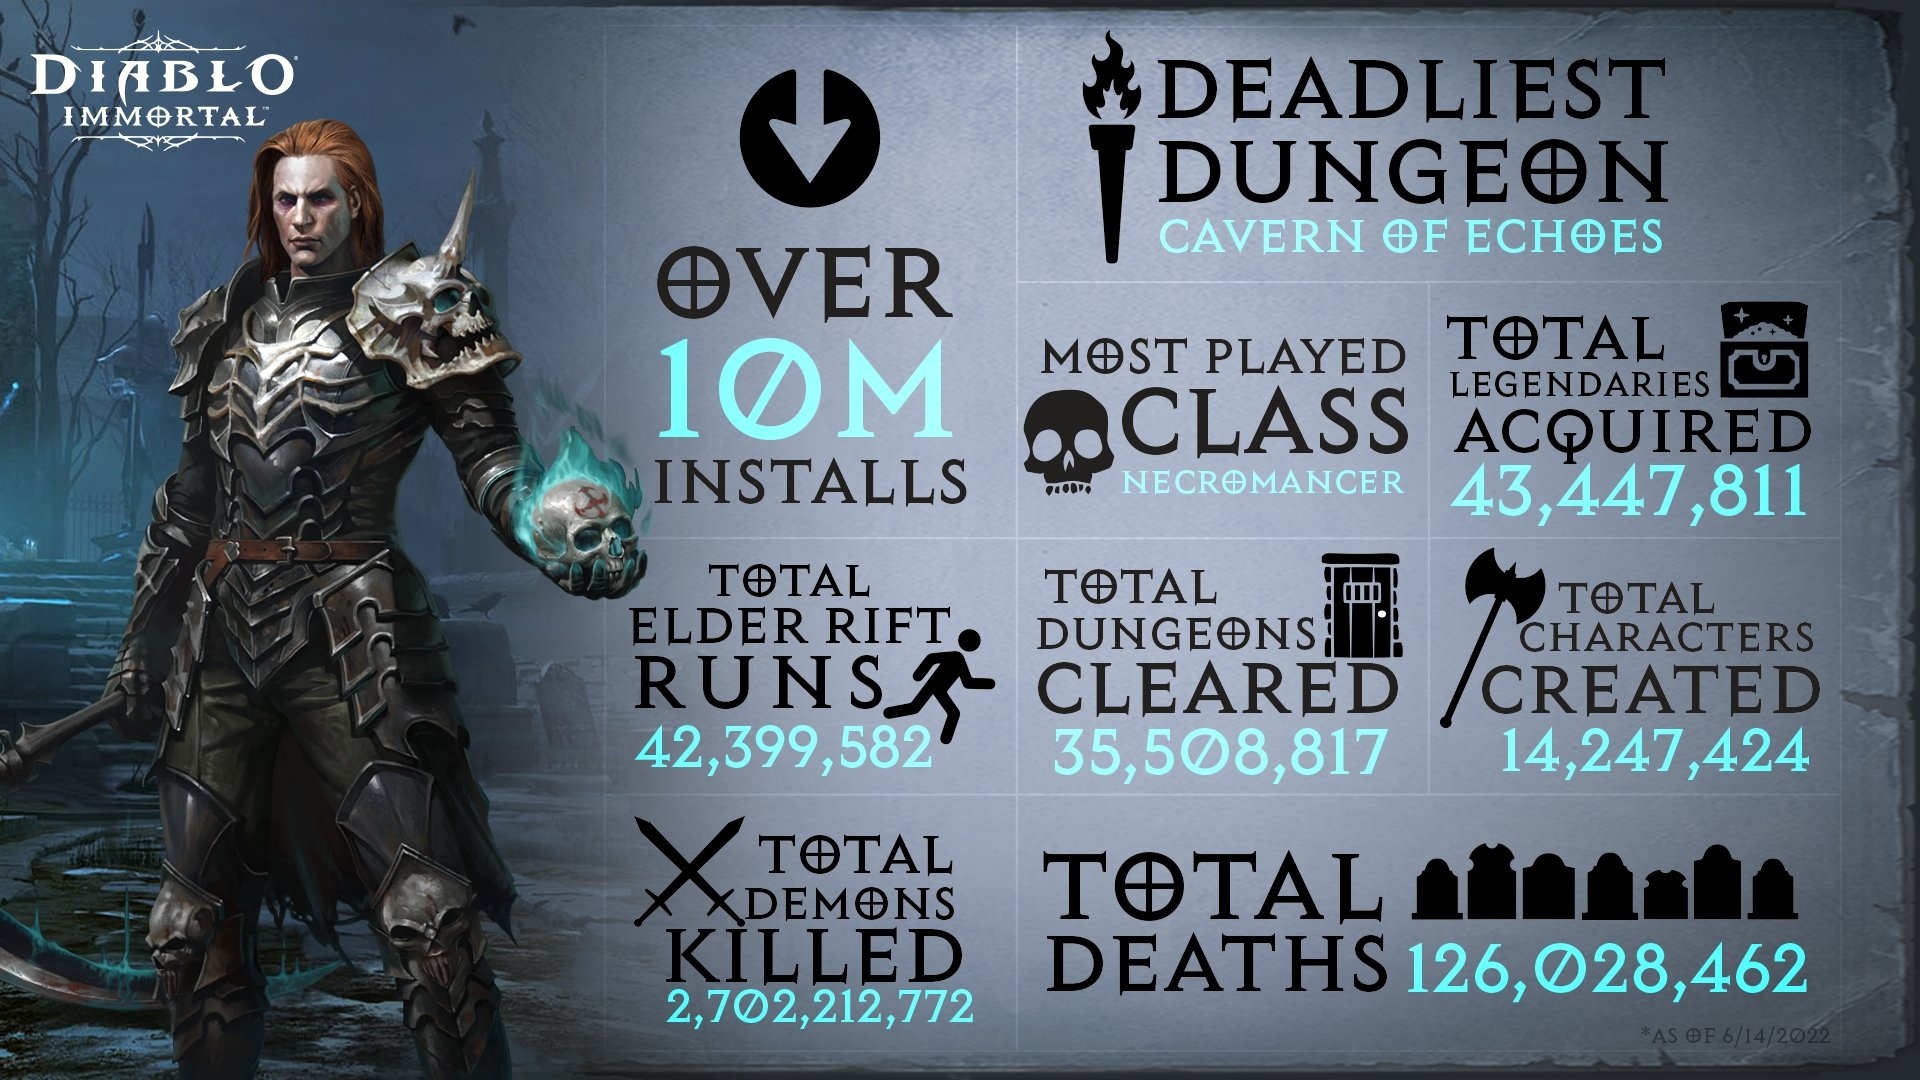 Diablo Immortal Post Launch Infographic and $24 Million in Revenue -  Wowhead News